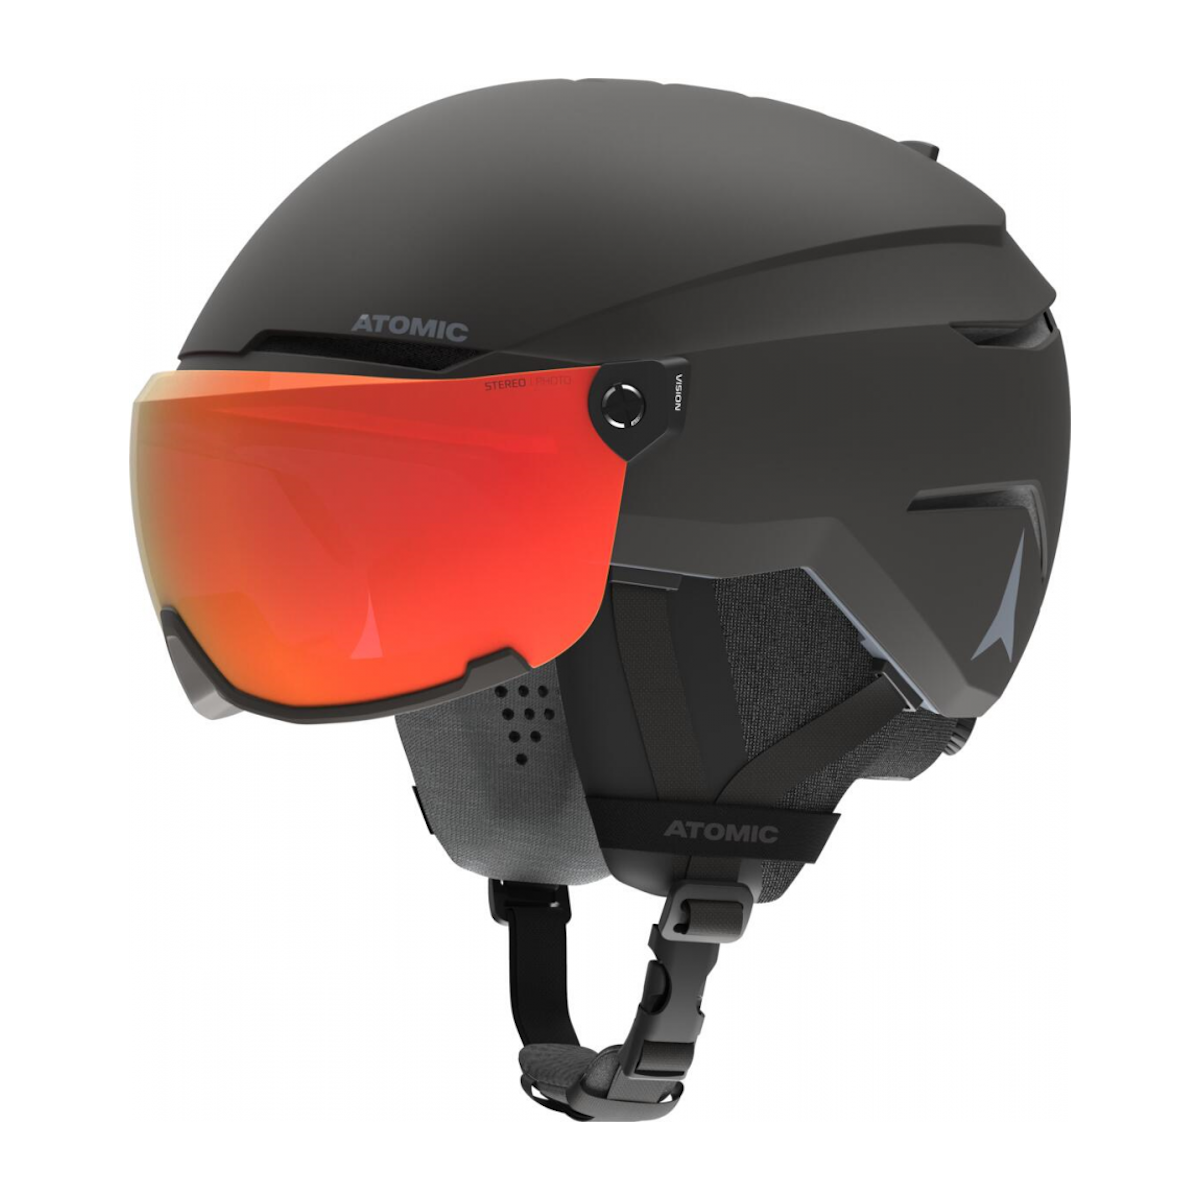 ATOMIC SAVOR VISOR PHOTO ID HD PH C1-3 helmet - black w/red